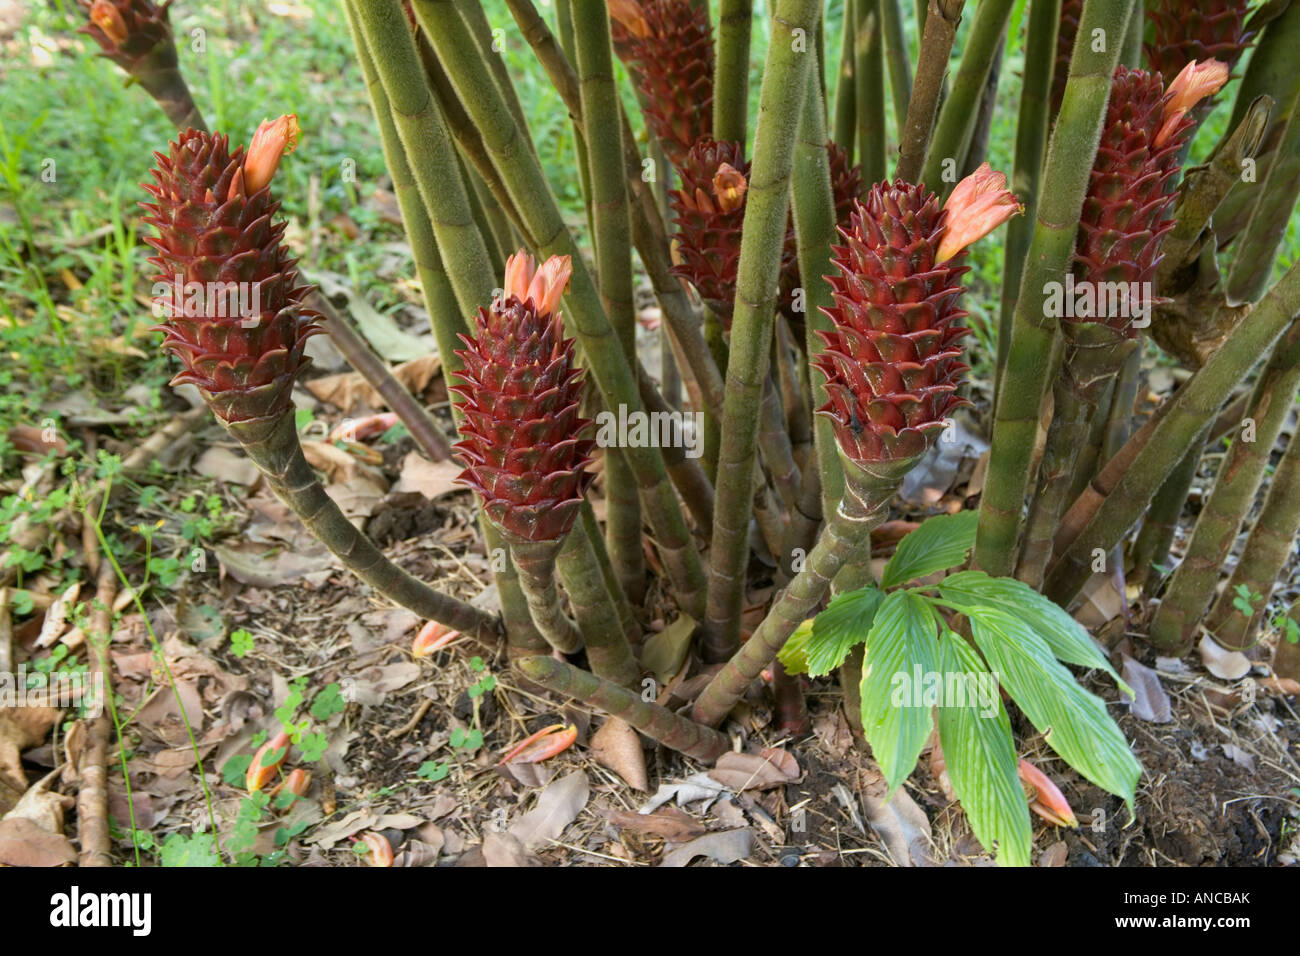 Ginger plant flowering 'Costus longibracteolatus'. Stock Photo